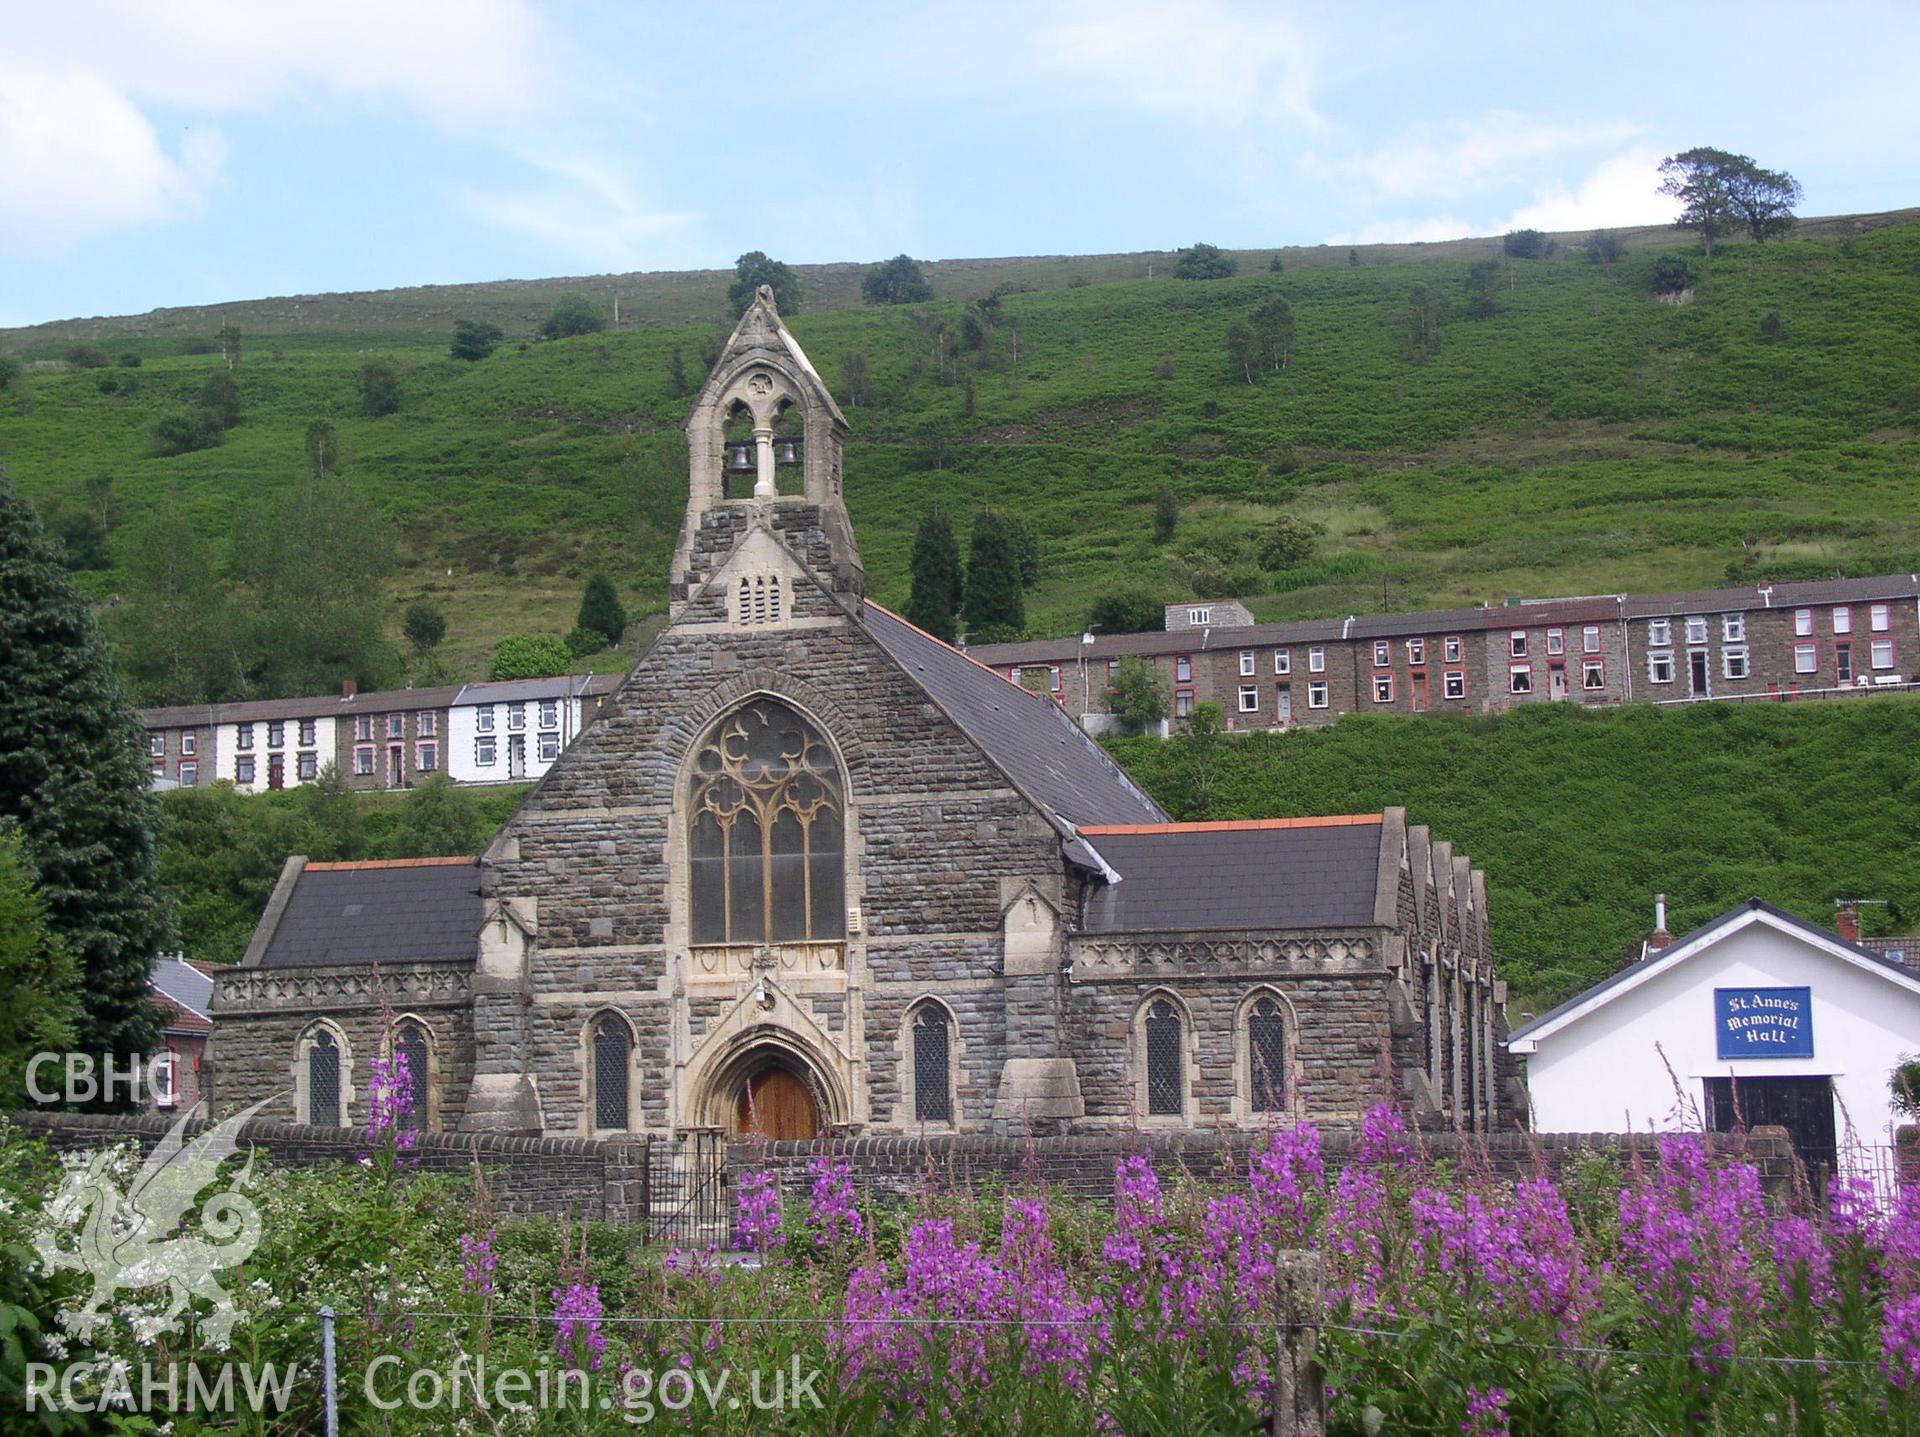 Colour digital photograph showing an elevation view of St Anne's Church, Ynyshir; Glamorgan.